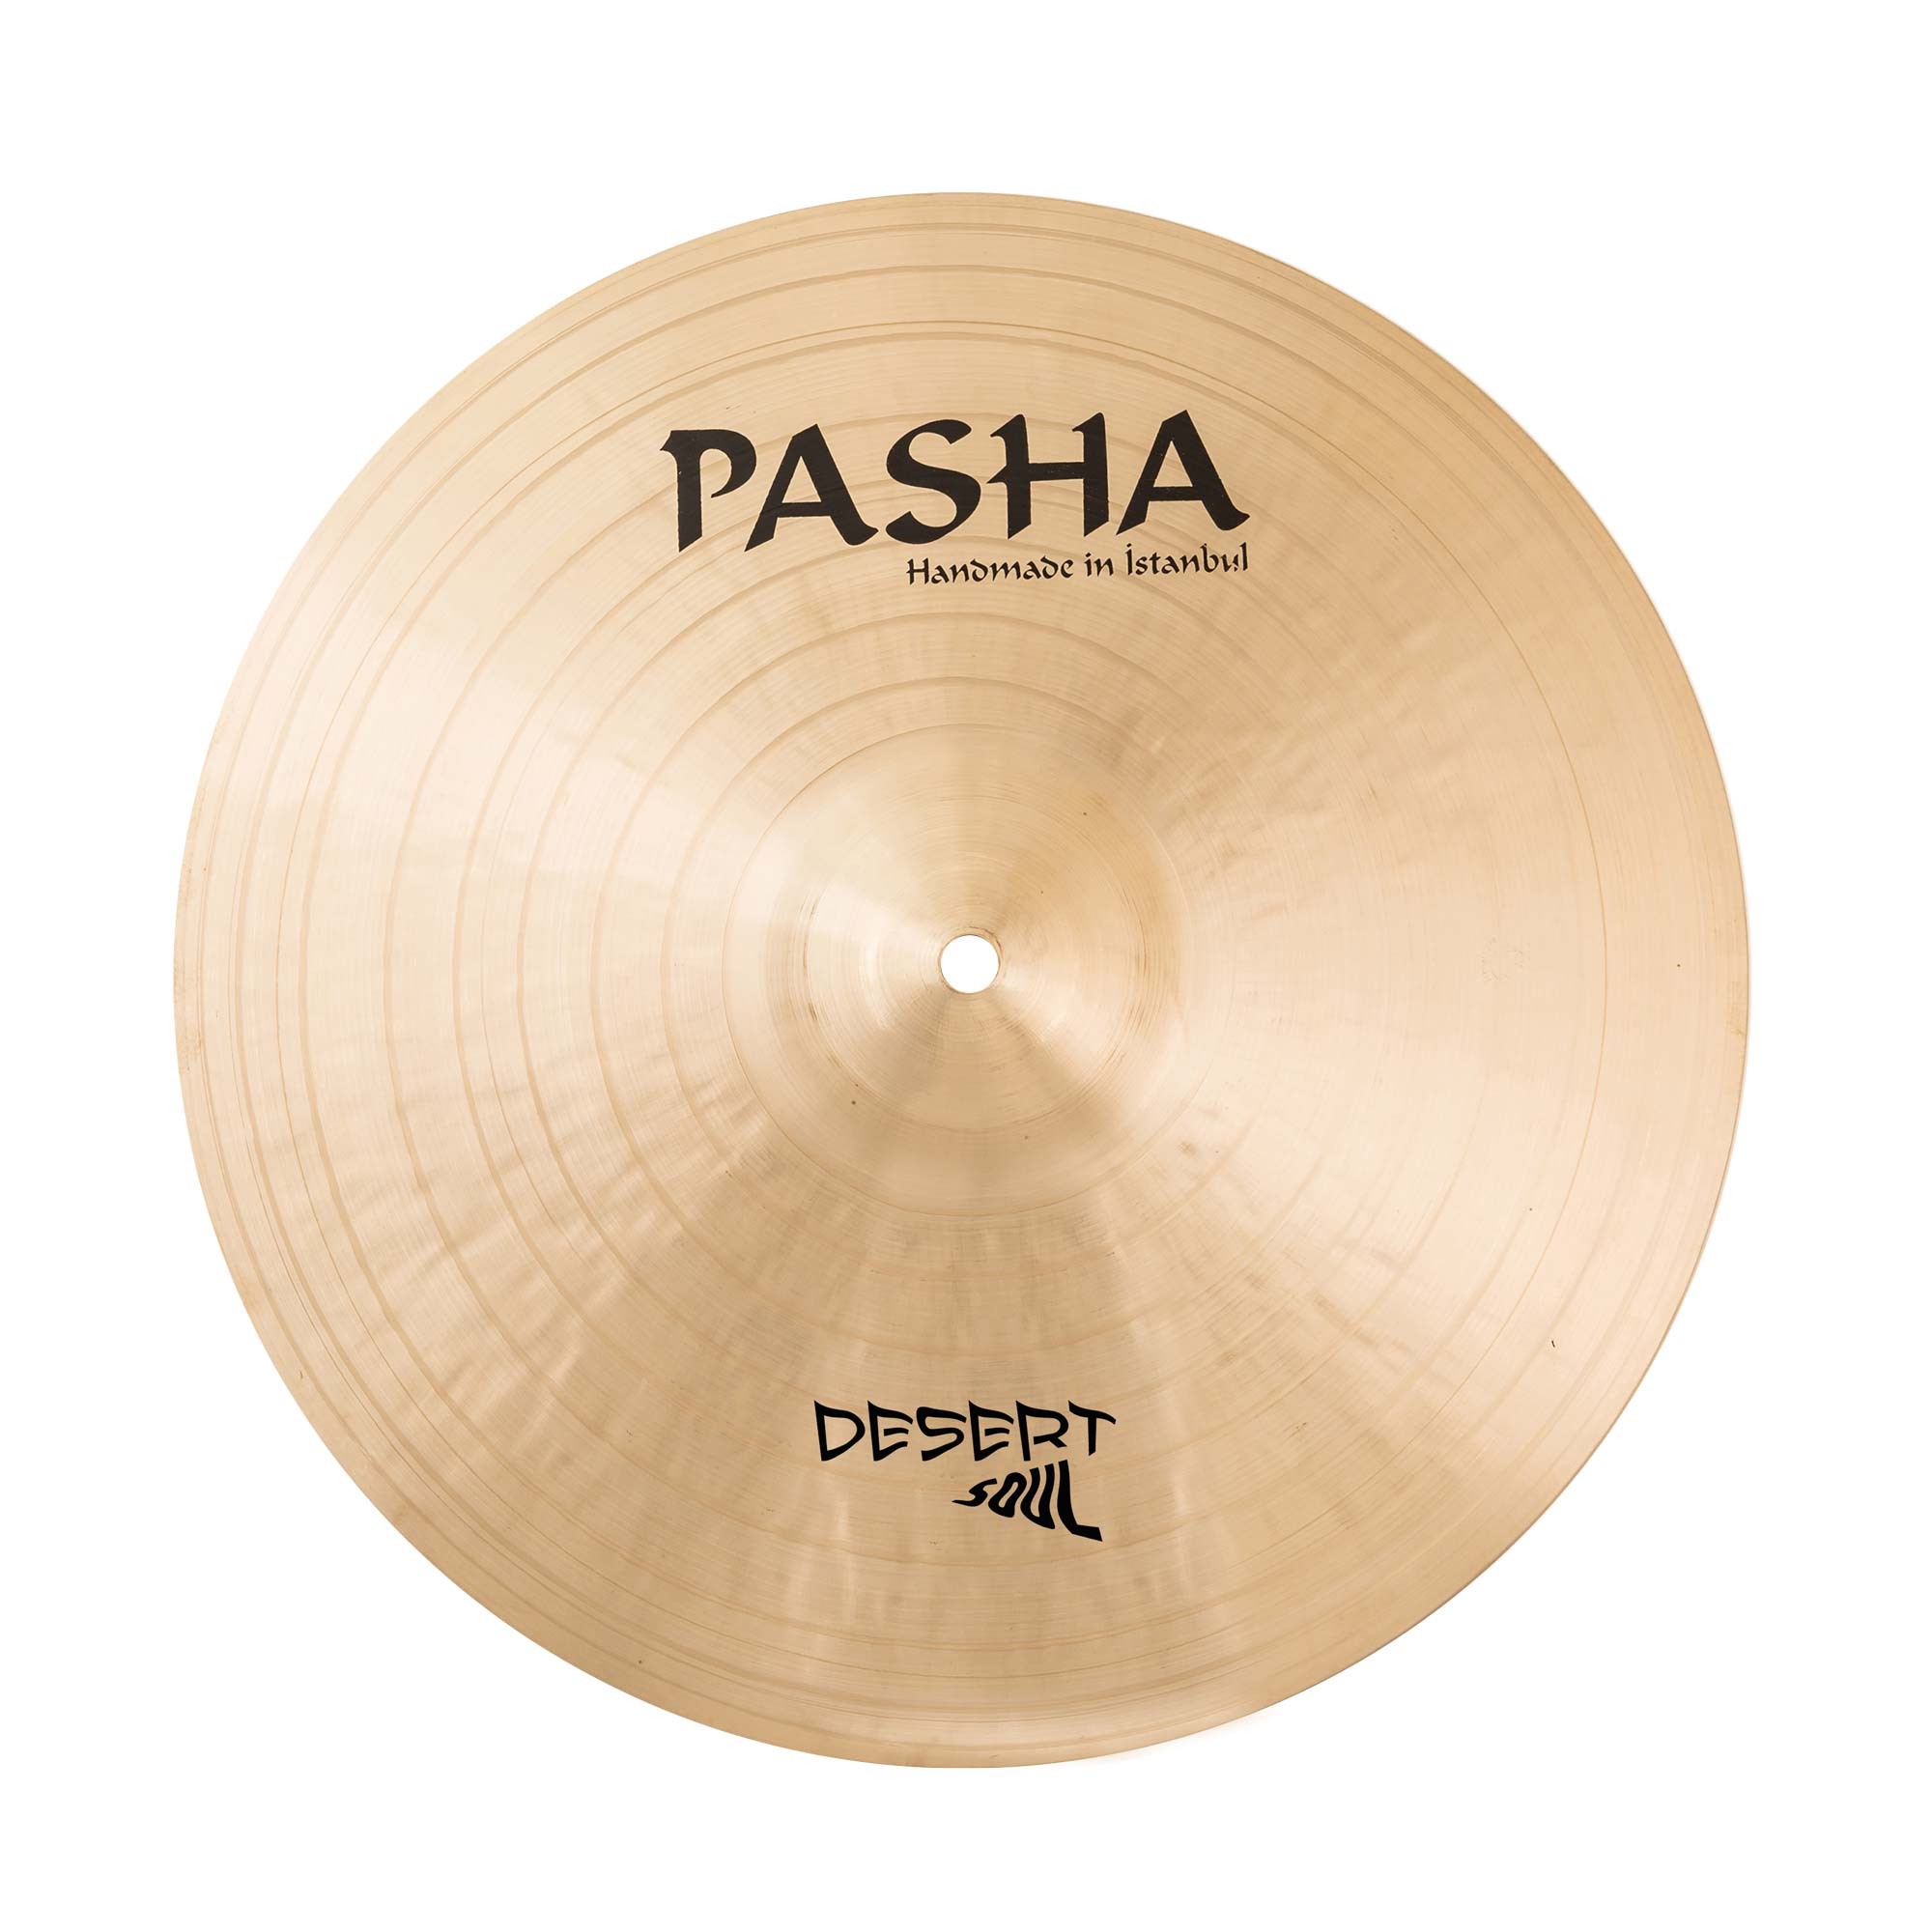 PASHA Pasha Desert Soul Crash DSL-C20 Dimensione: 20''